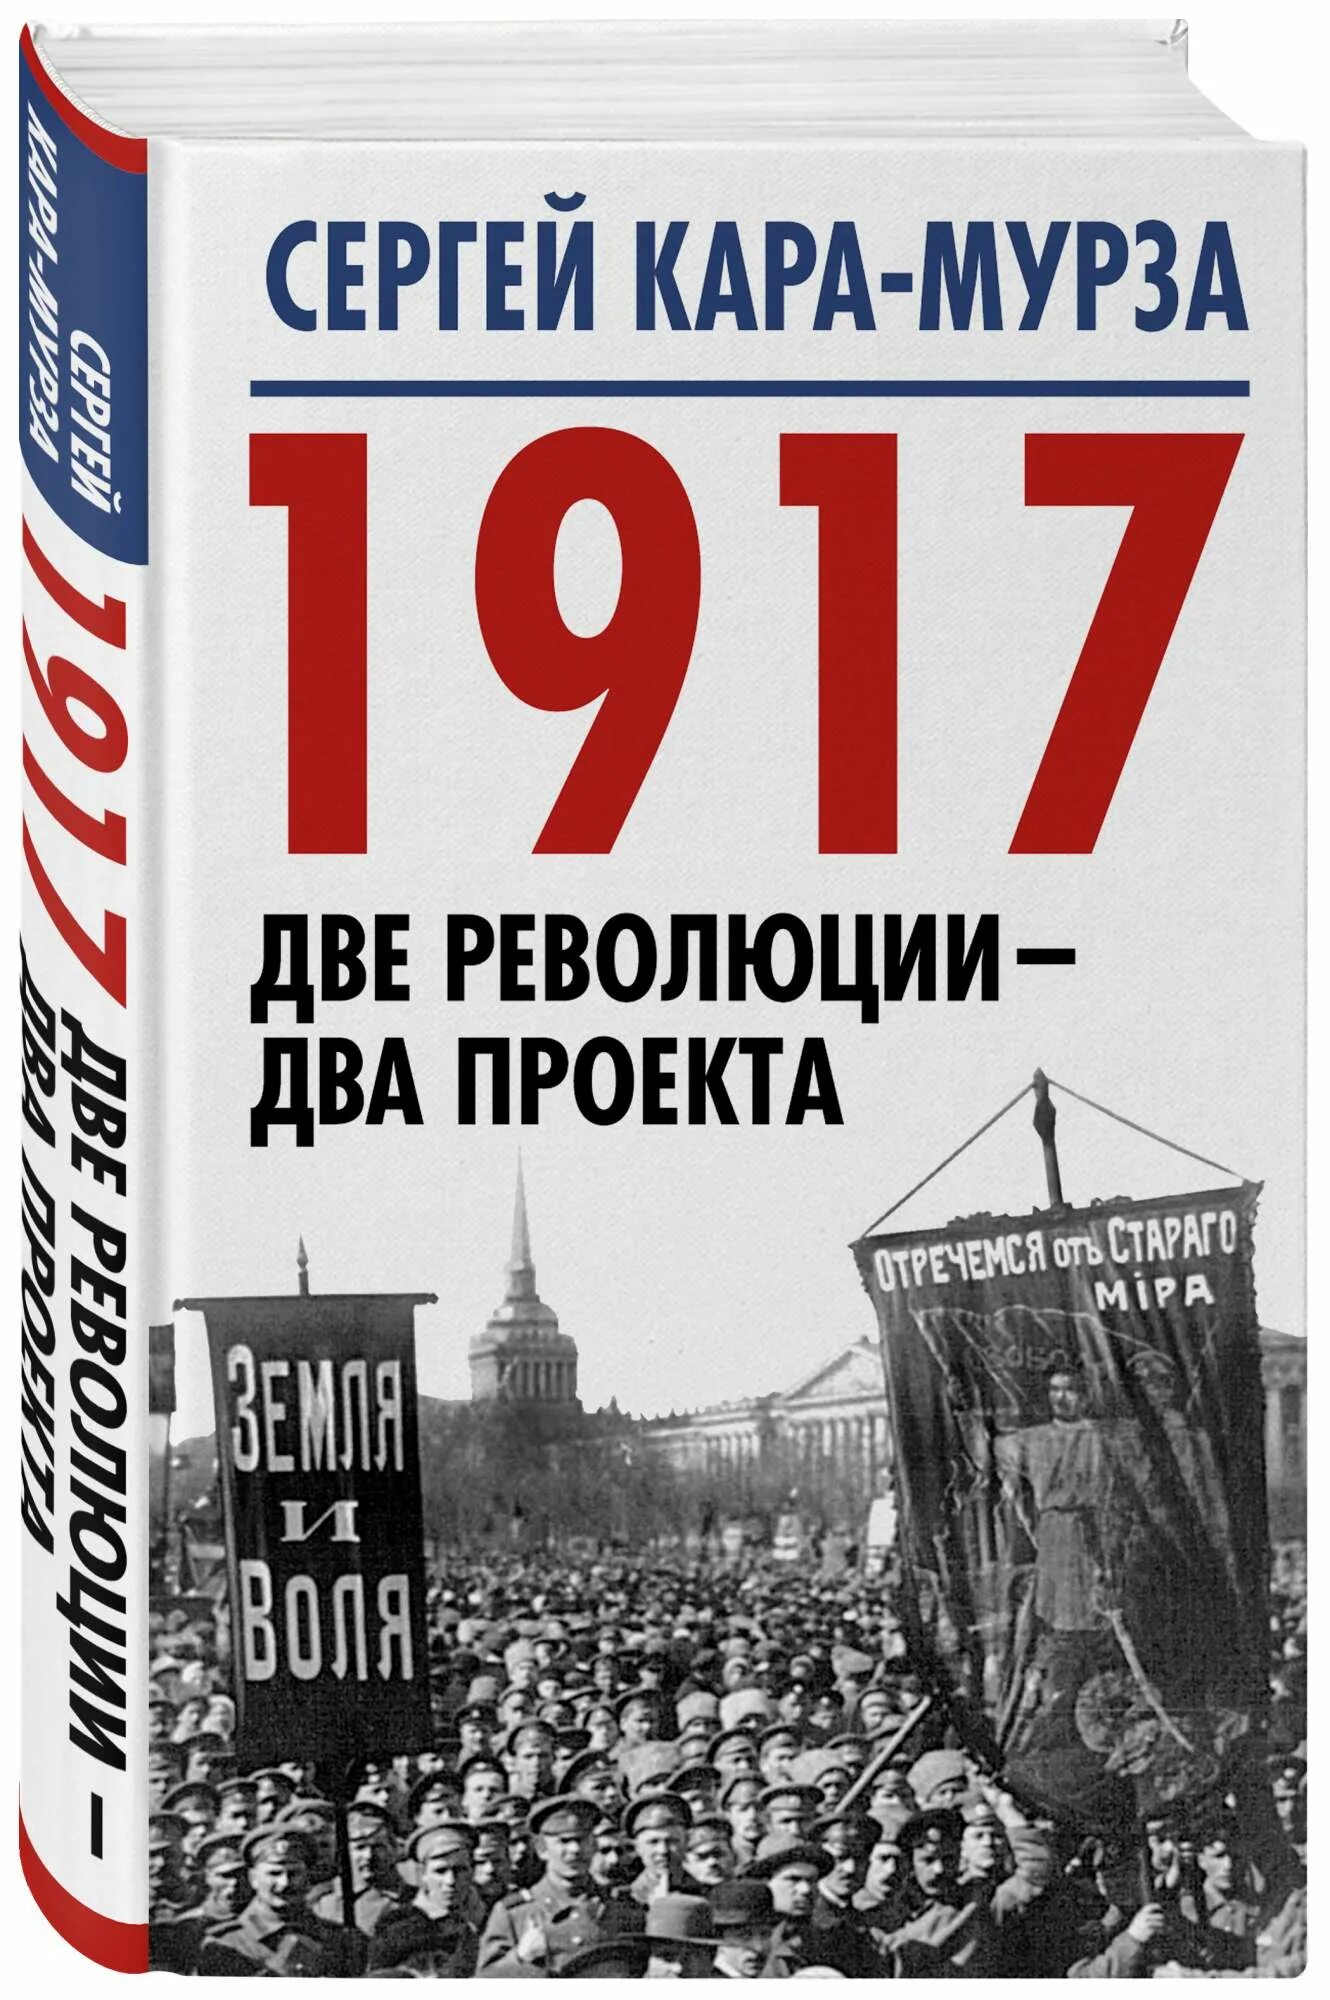 Революция 2 12. Две революции 1917. Книга 1917 года. Две революции книга.